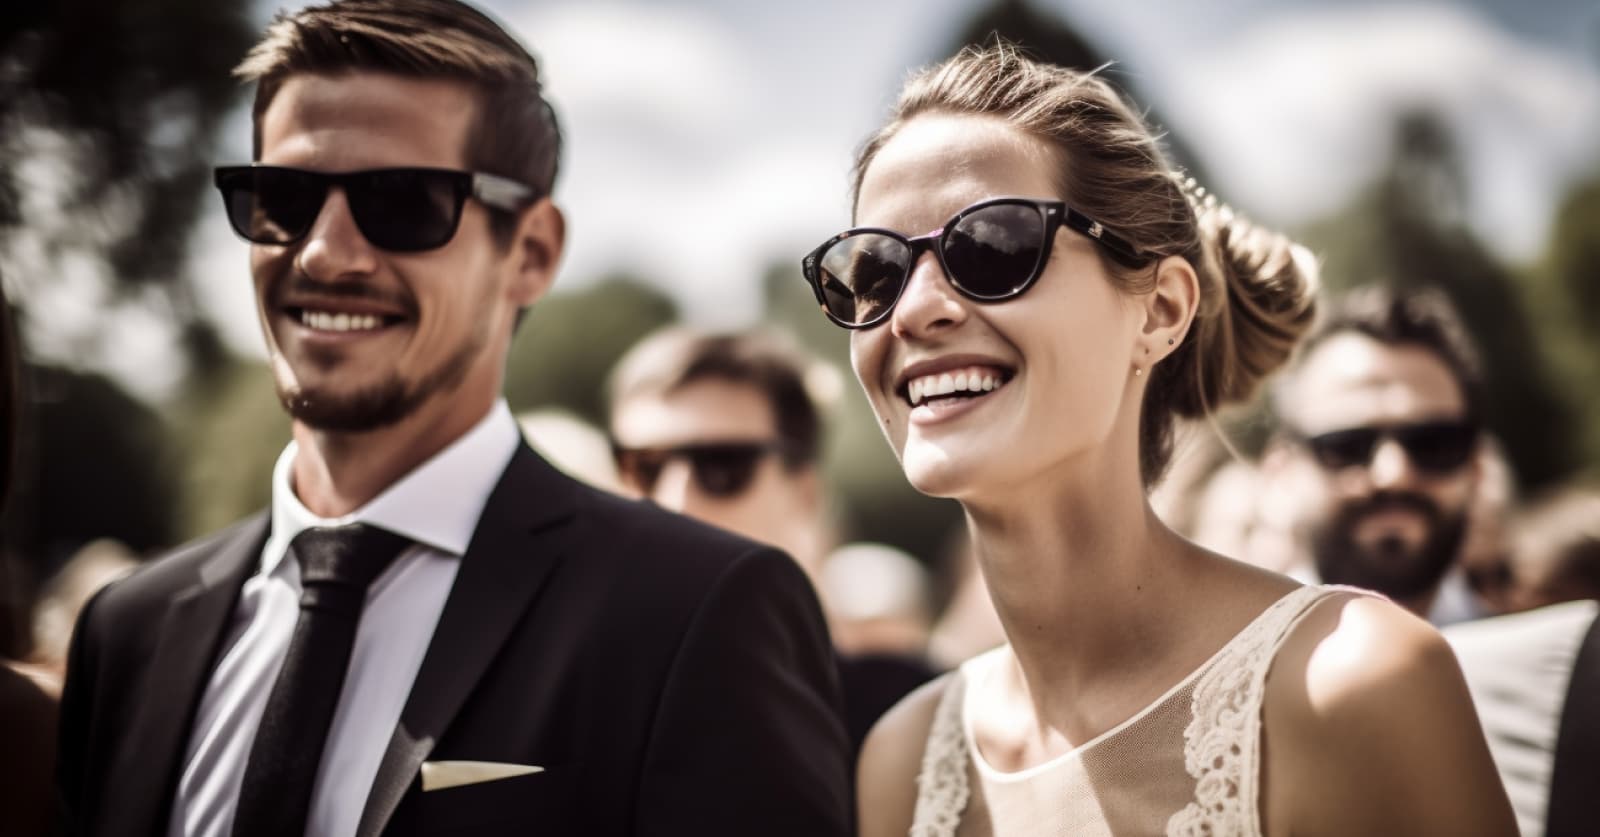 wearing sunglasses at weddings